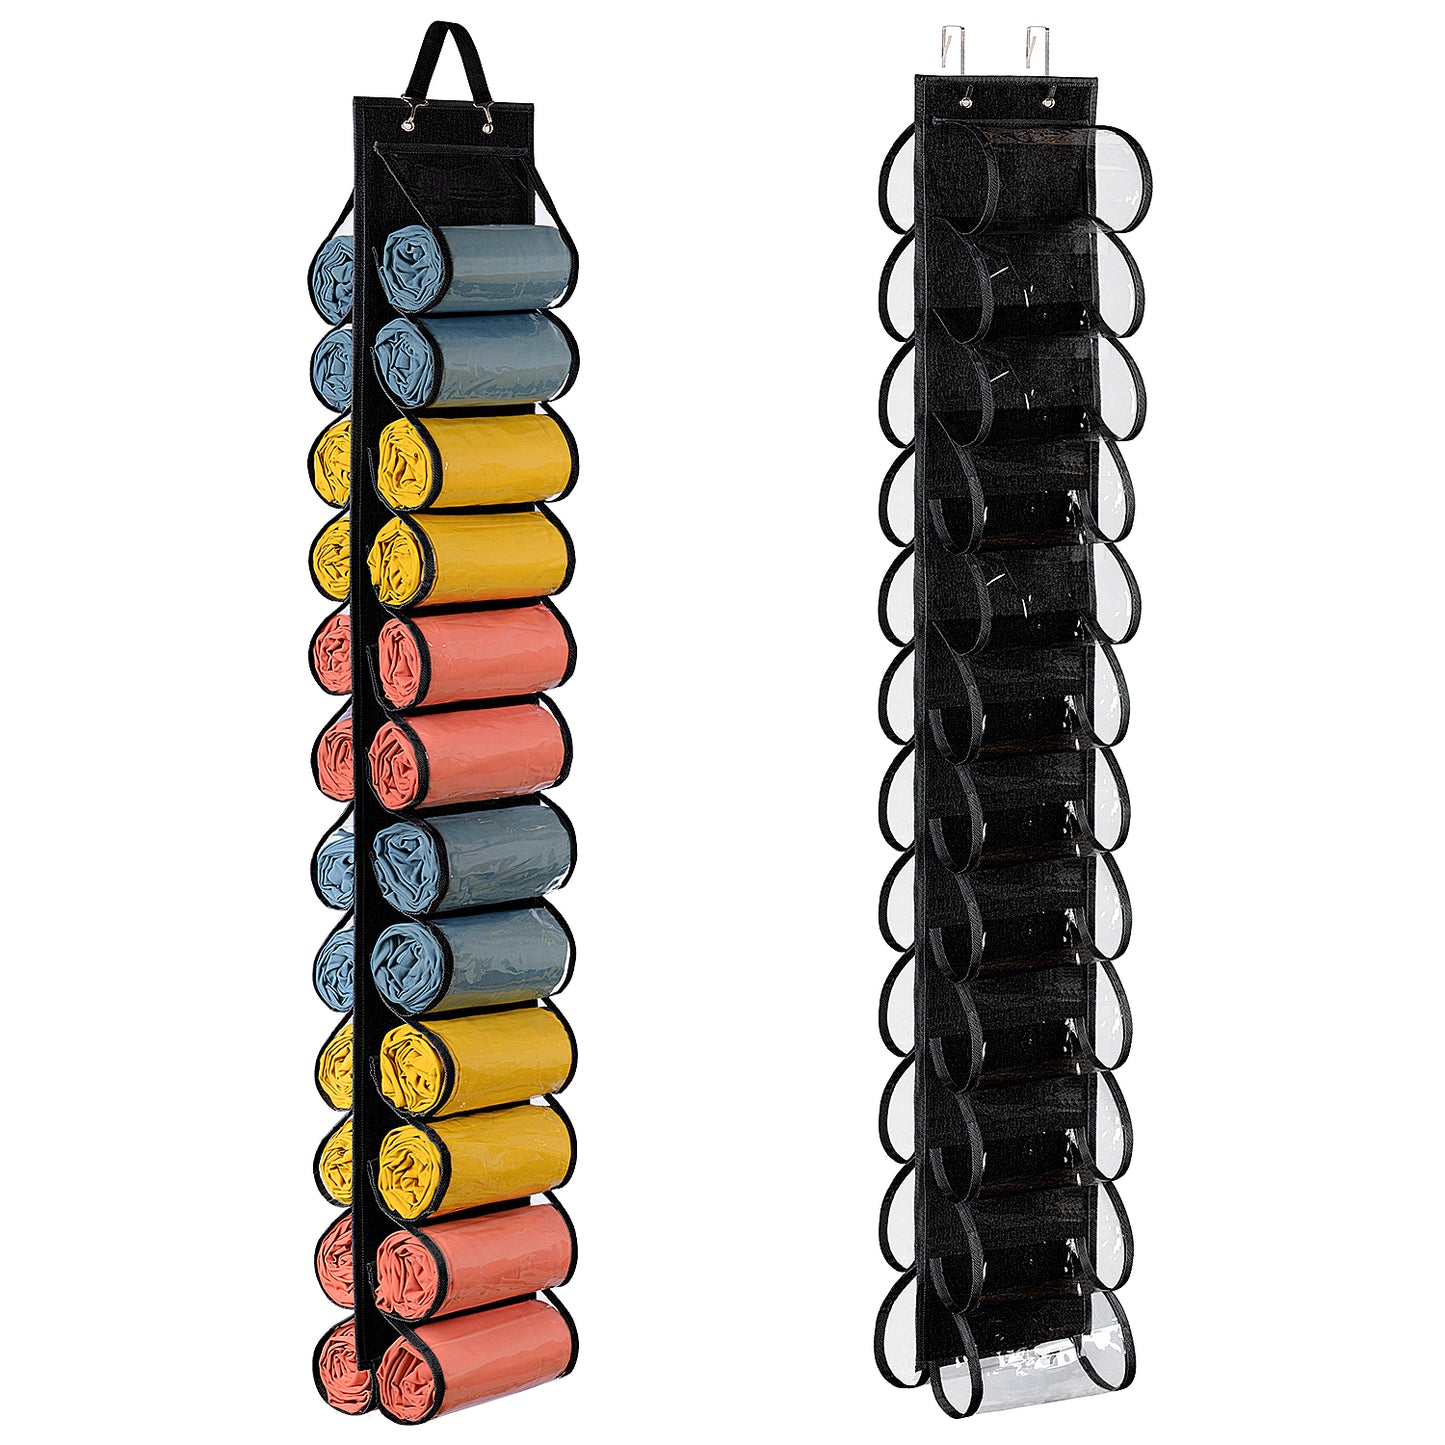 Hanging Yoga Legging Storage Organizer with 24 Pockets